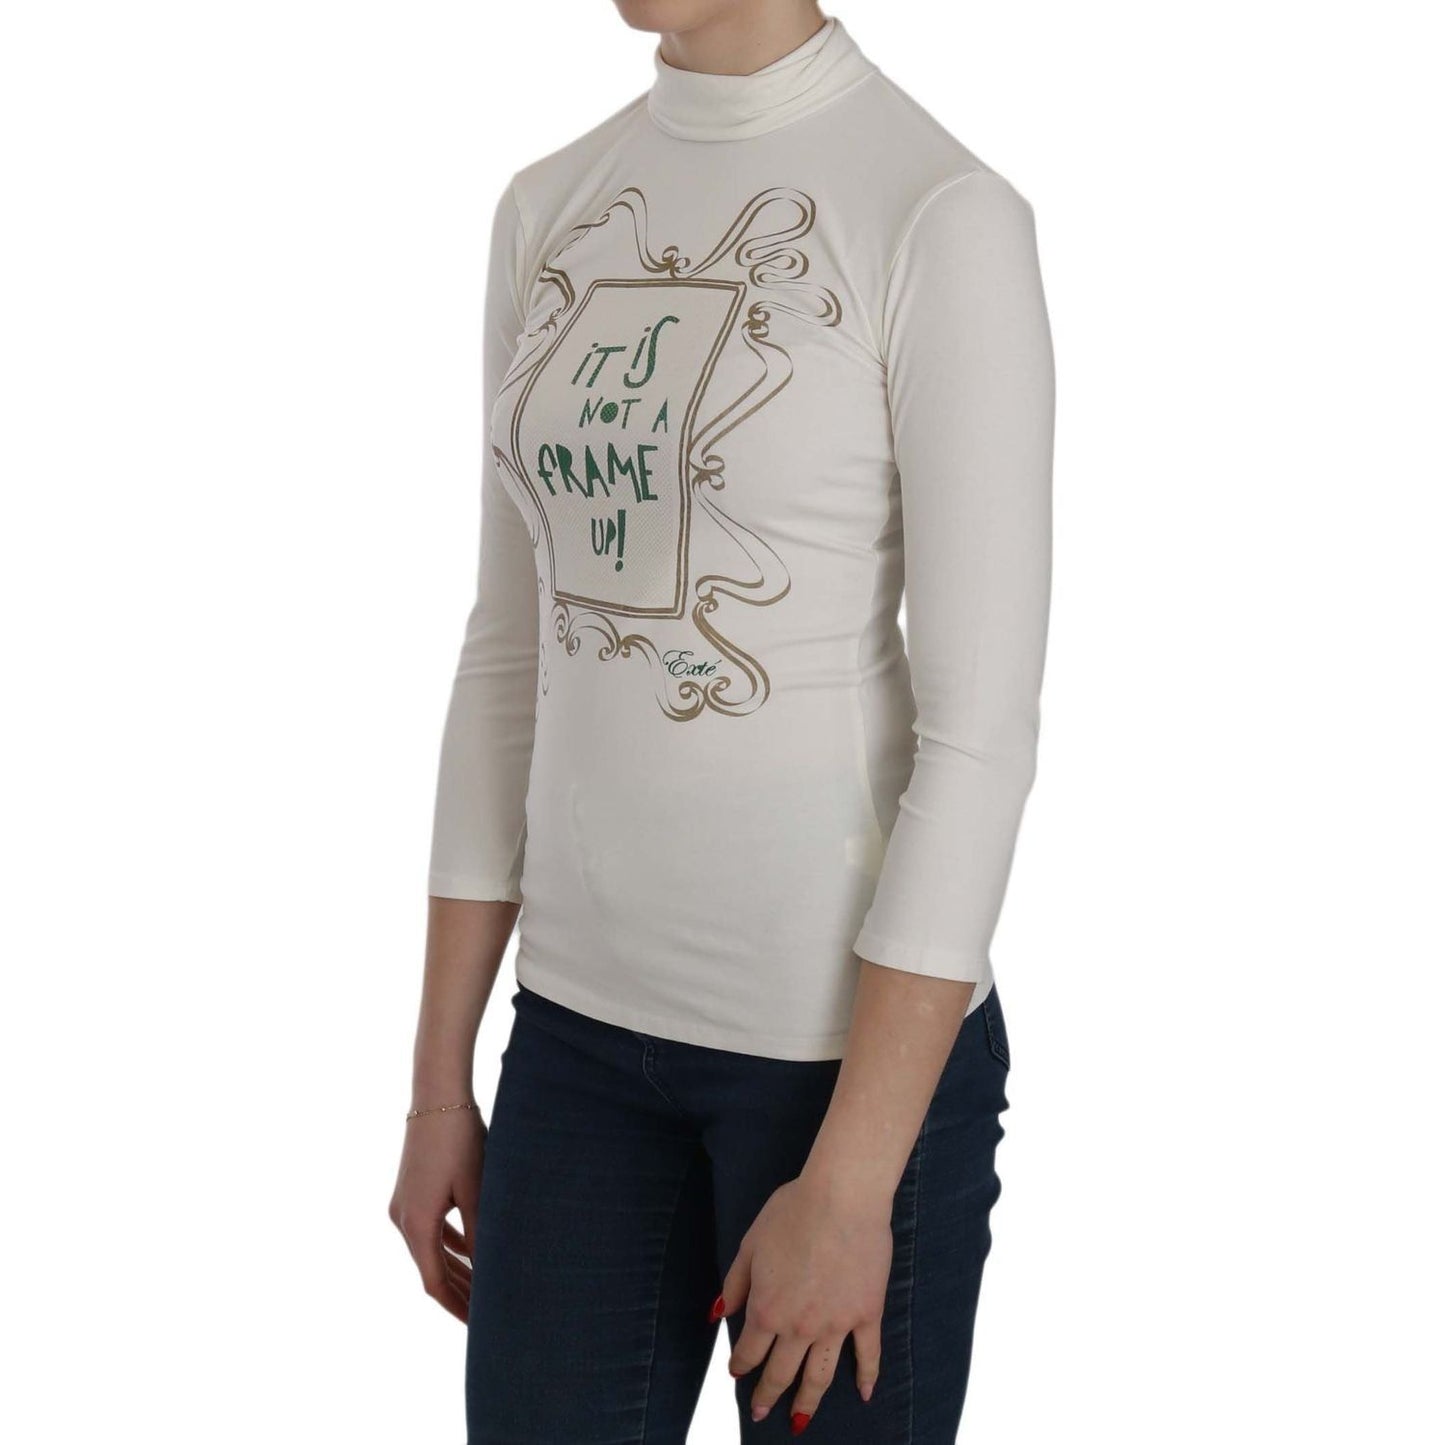 Exte Chic White Printed Turtle Neck Blouse white-printed-turtle-neck-3-4-sleeve-top-cotton-blouse IMG_2740-5bad97ed-1eb.jpg